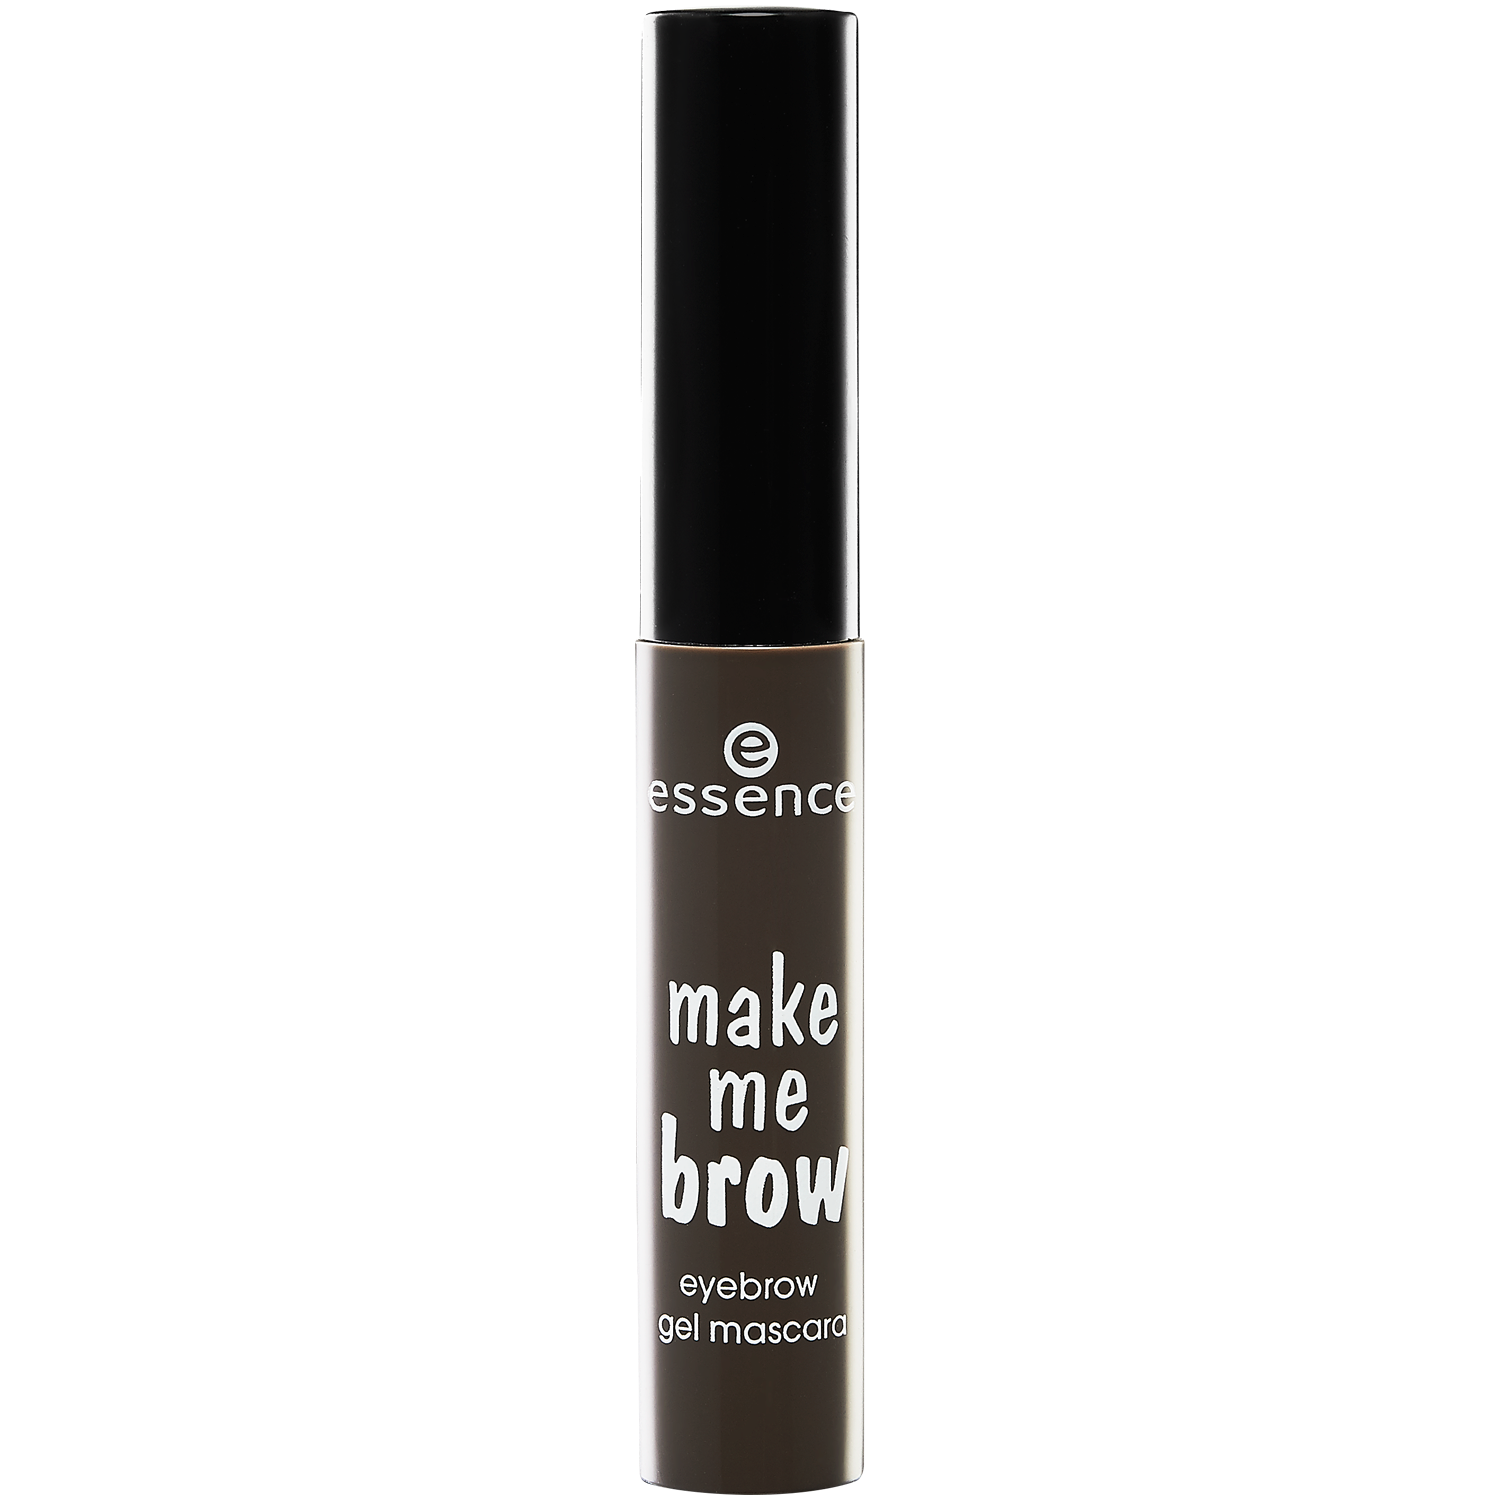 Гель для укладки бровей 02 Essence Make Me Brow, 3,8 гр краски для бровей make me brow gel mascara para cejas essence 3 8 мл 01 blondy brow